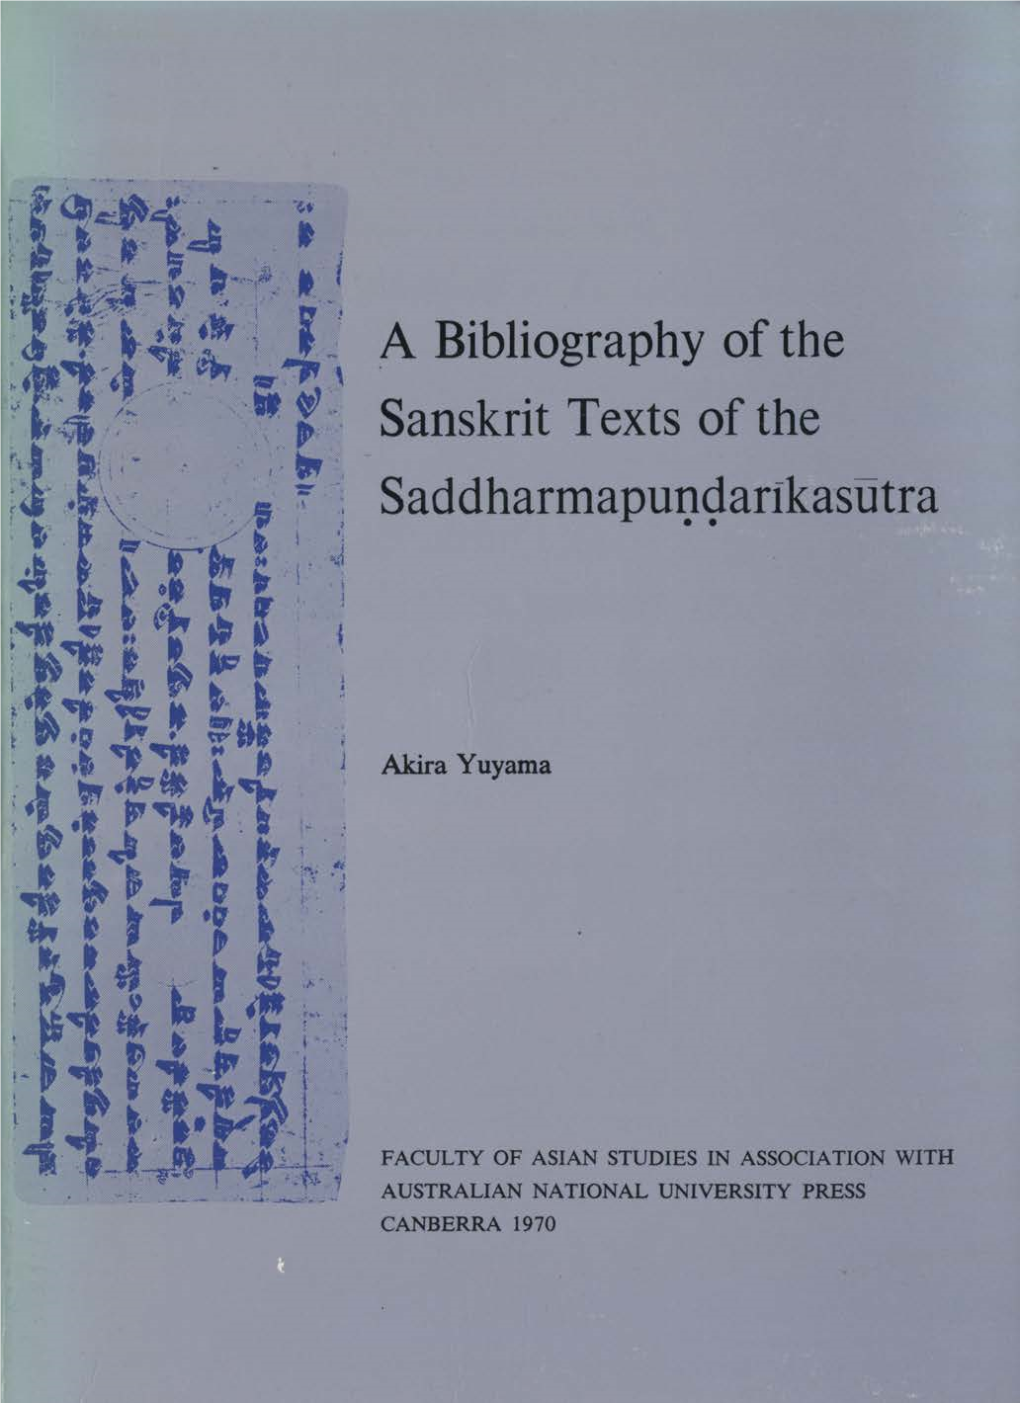 A Bibliography of the Sanskrit Texts of the Saddharmapundarikasutra